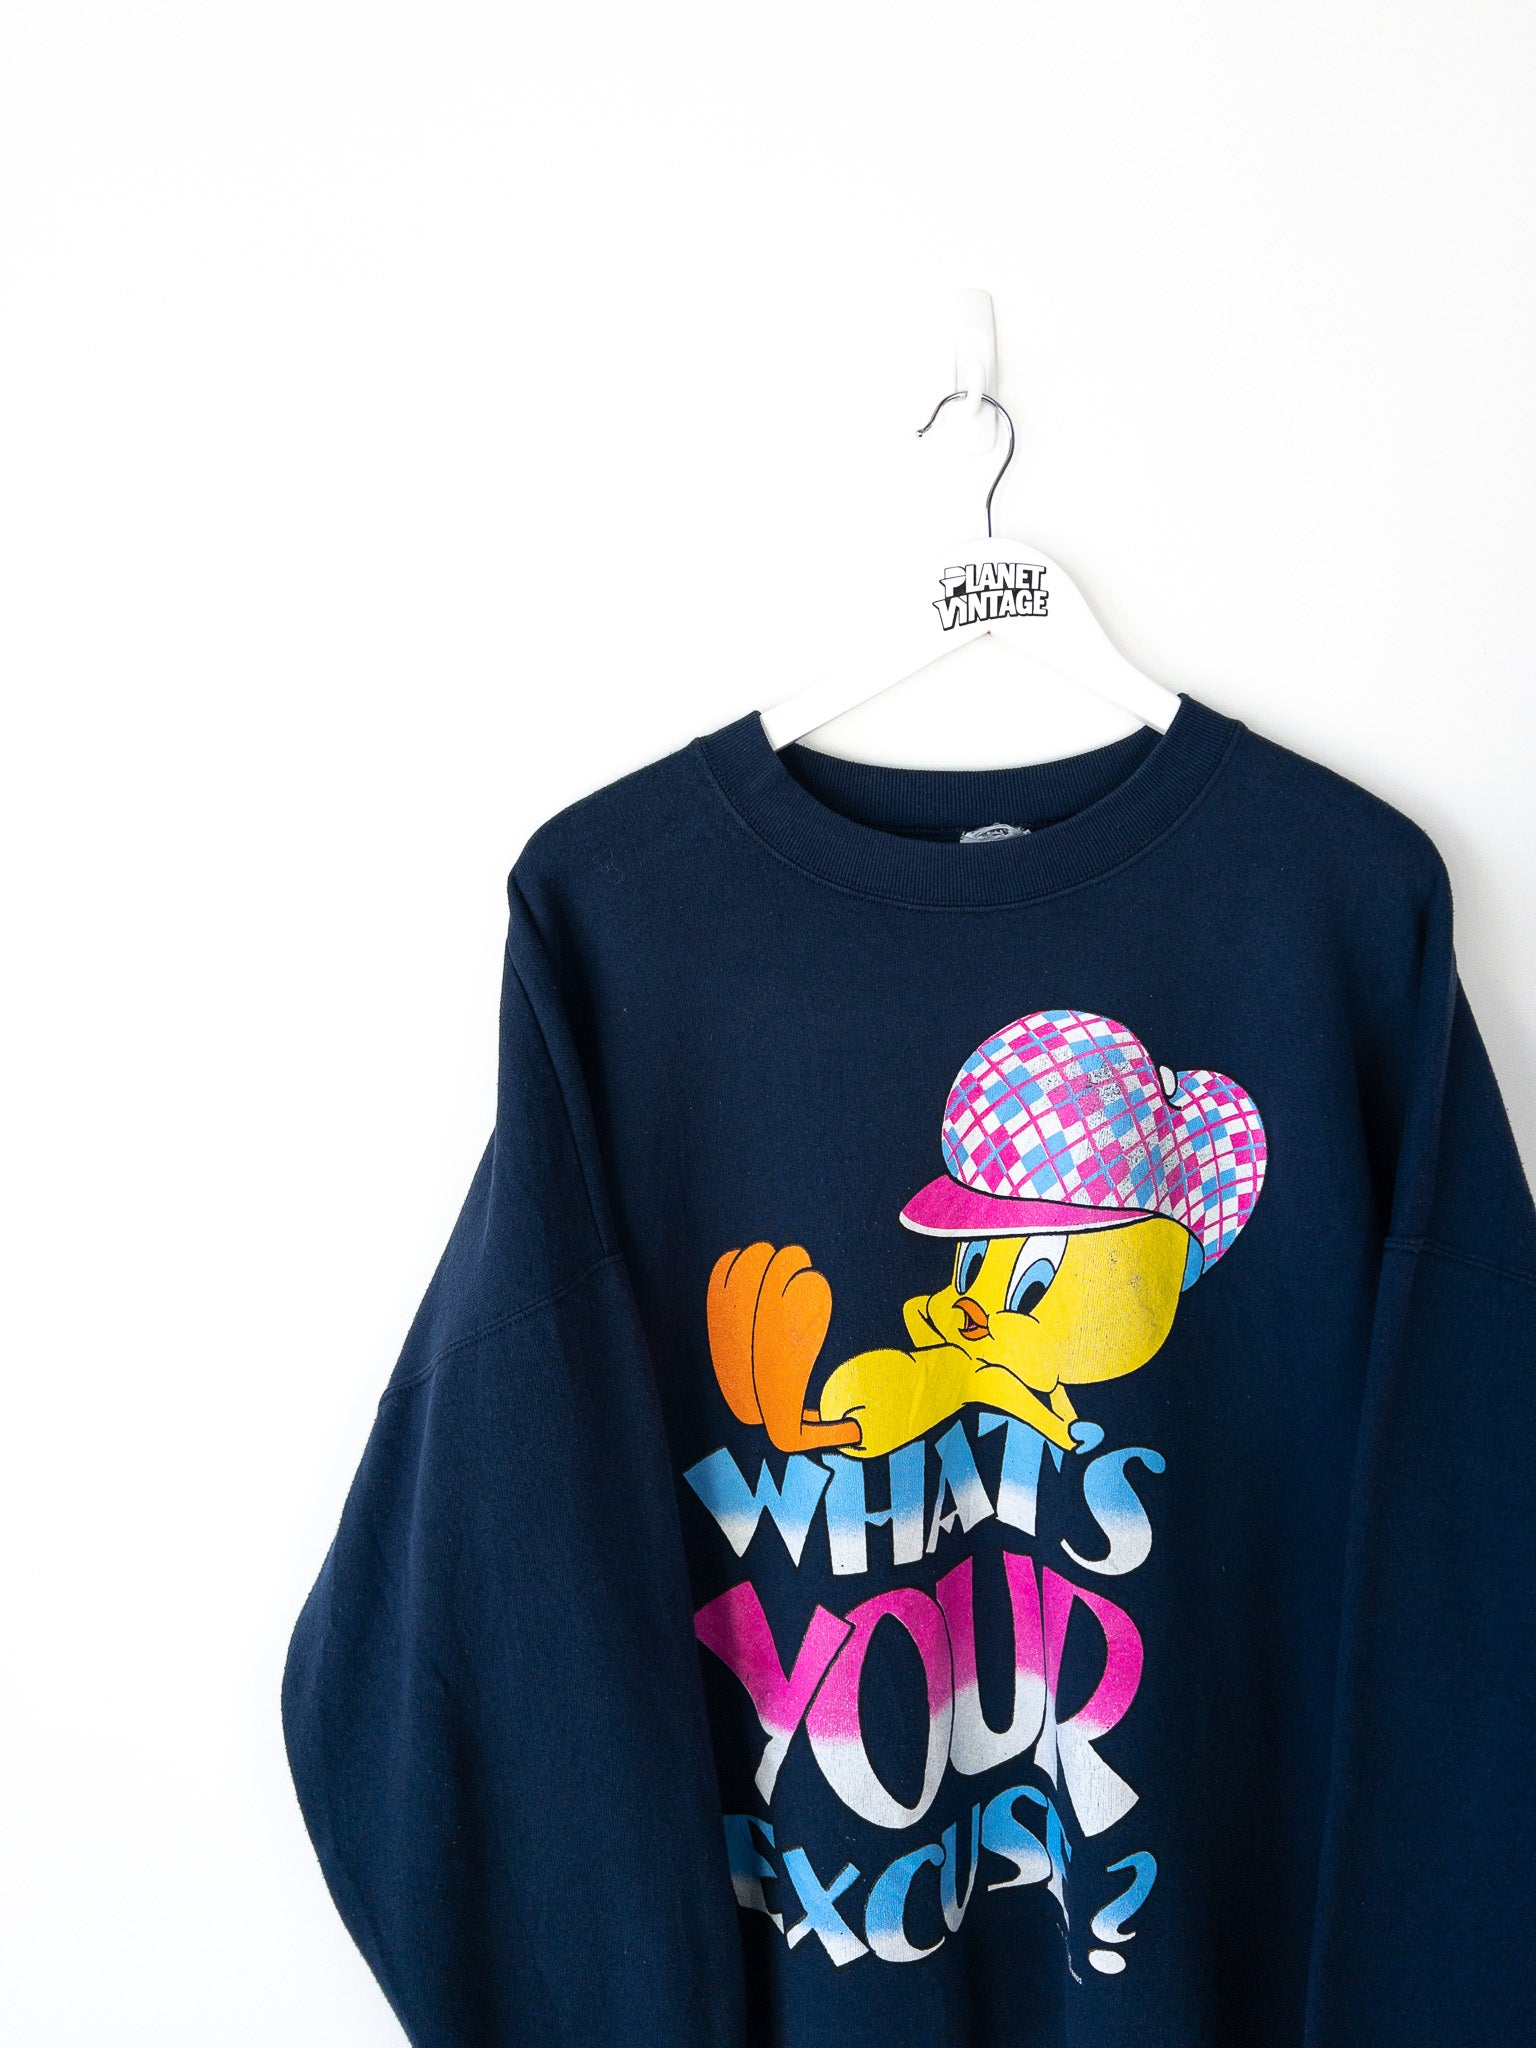 Vintage Tweety 'Whats Your Excuse?' Sweatshirt (XXXL)